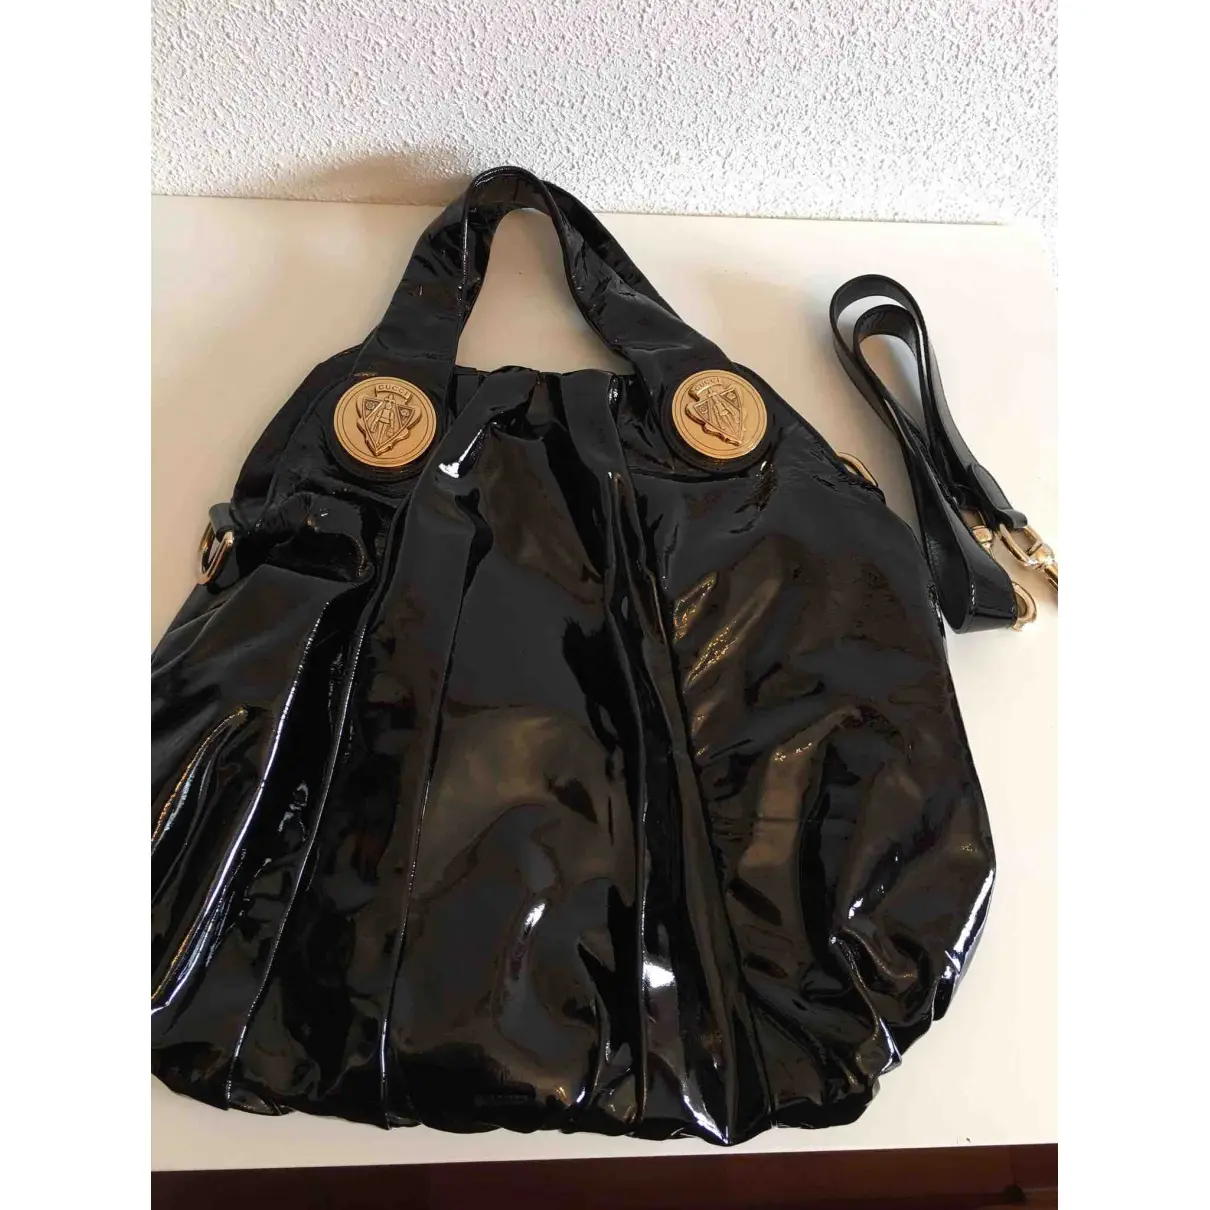 Gucci Hysteria patent leather handbag for sale